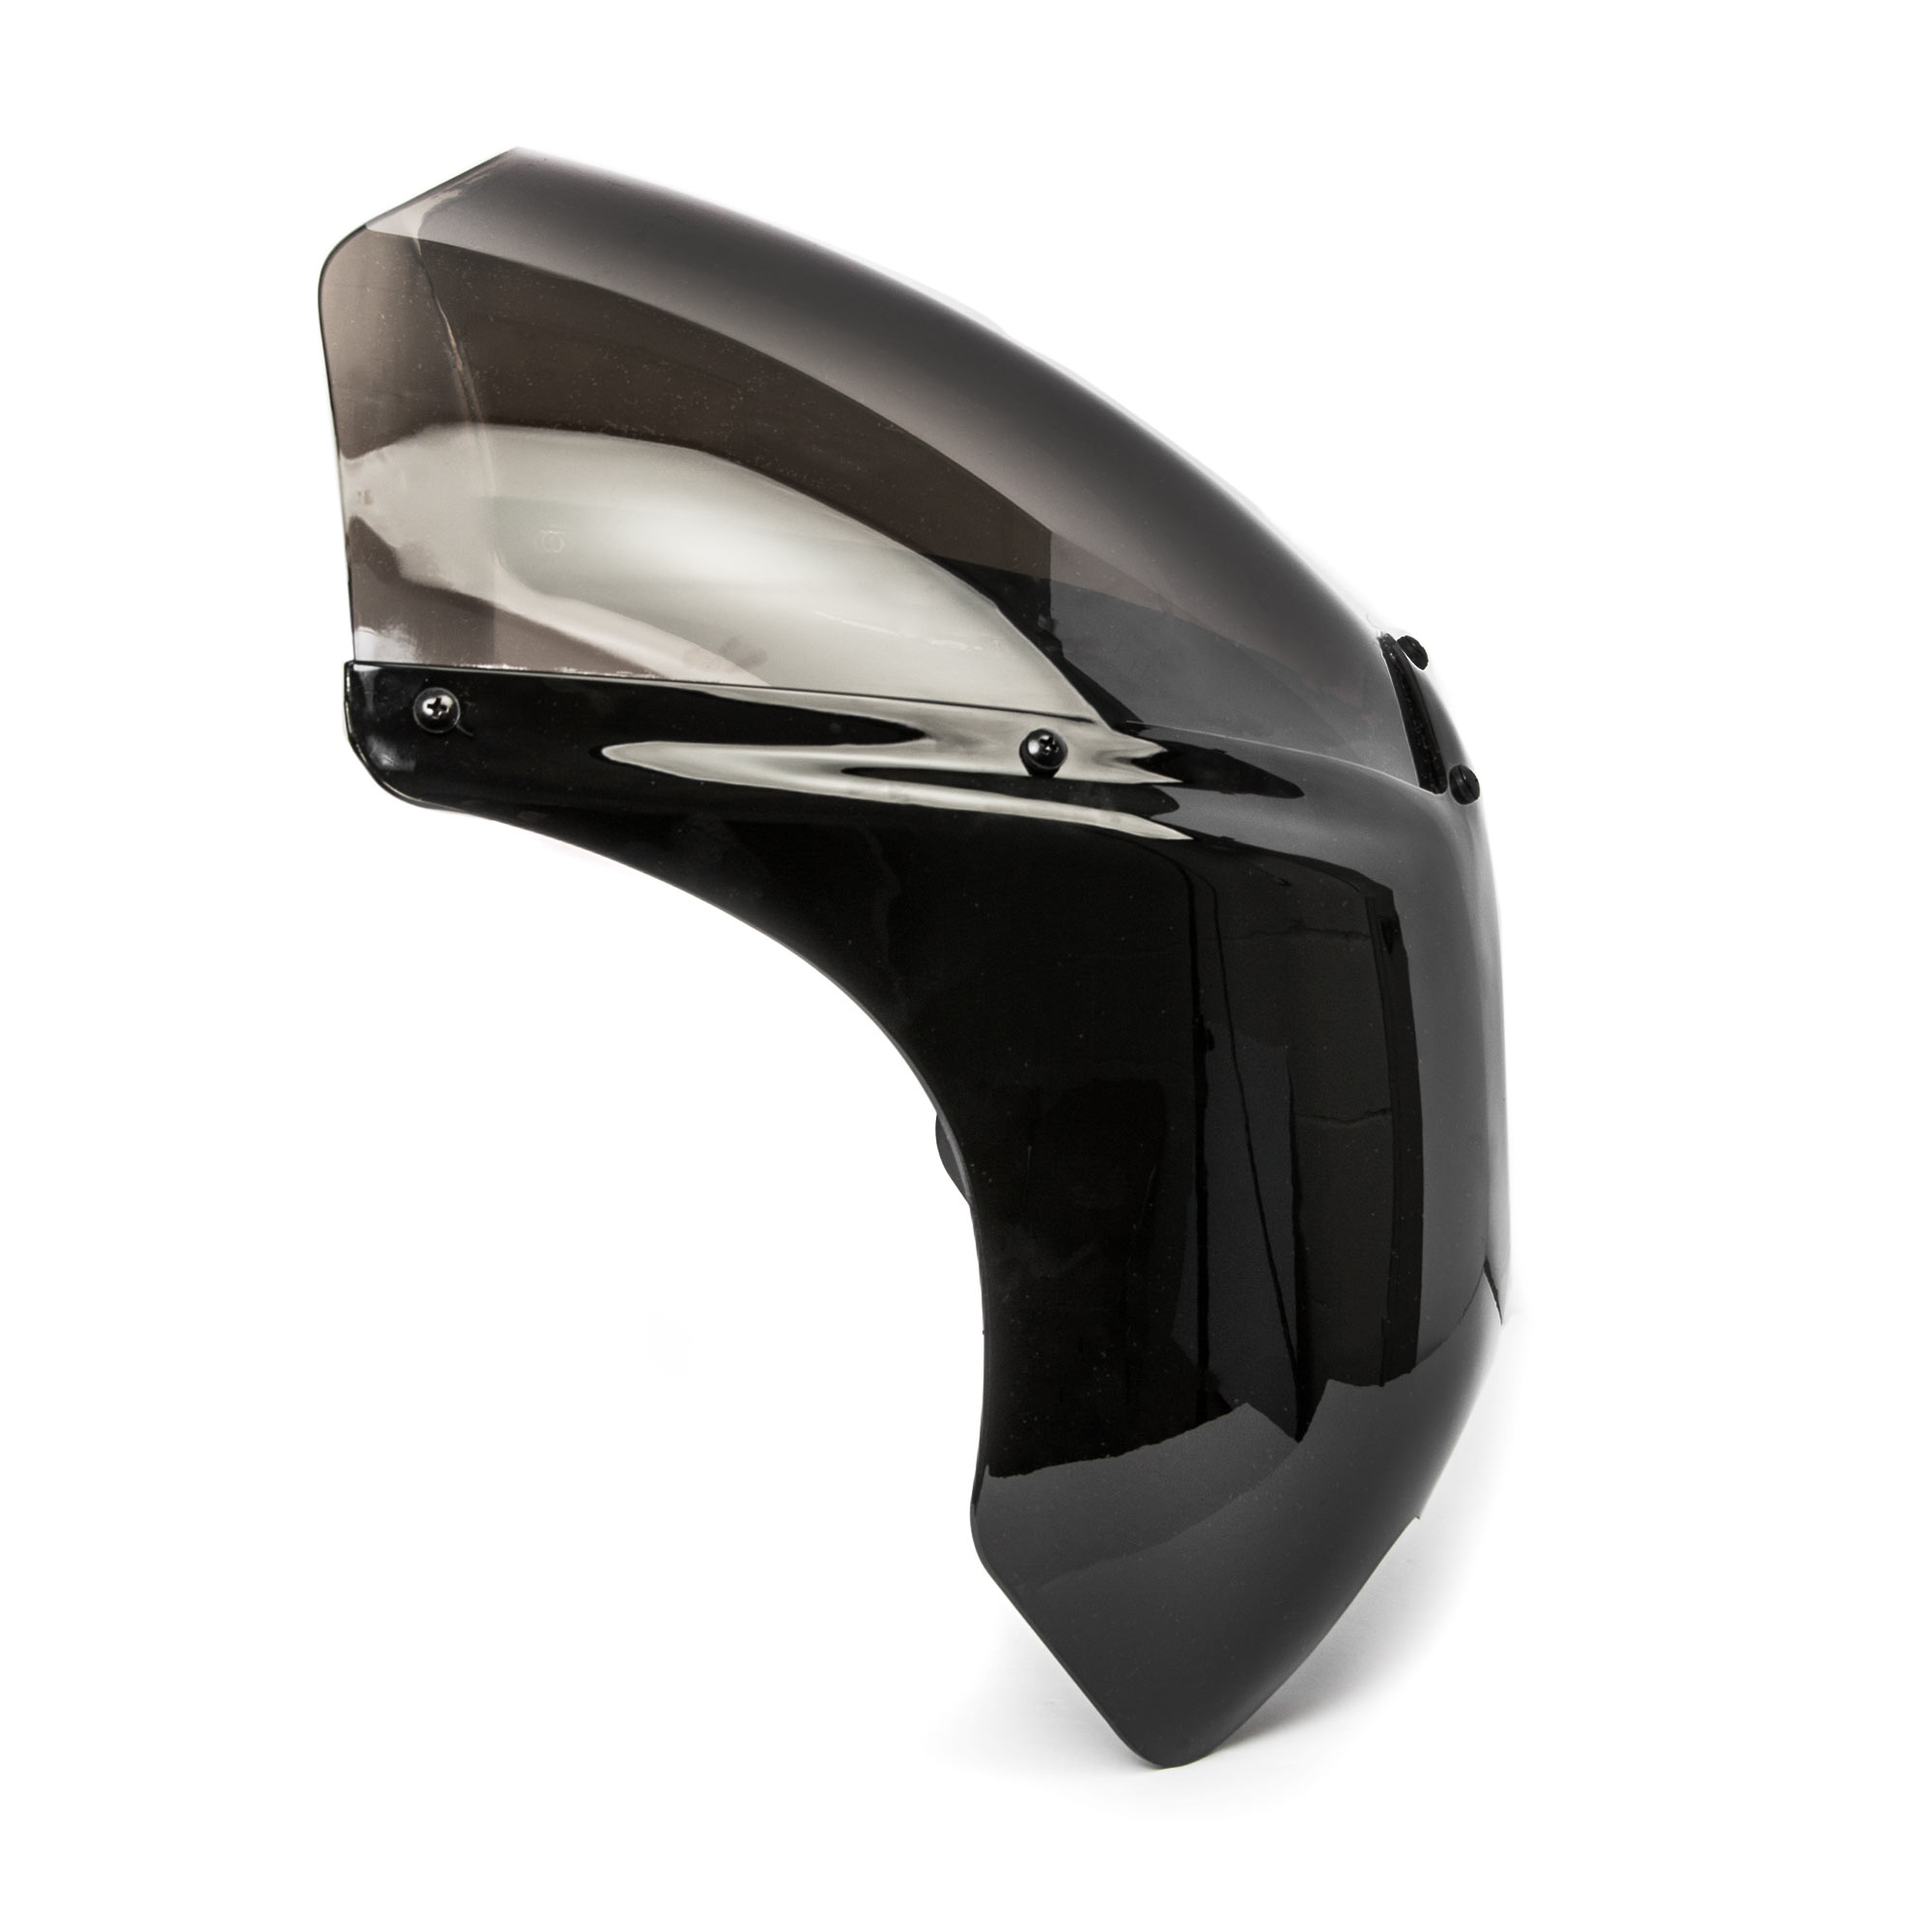 Krator Black & Smoke Headlight Fairing Windshield Kit Compatible with Suzuki Boulevard S40 S50 S83